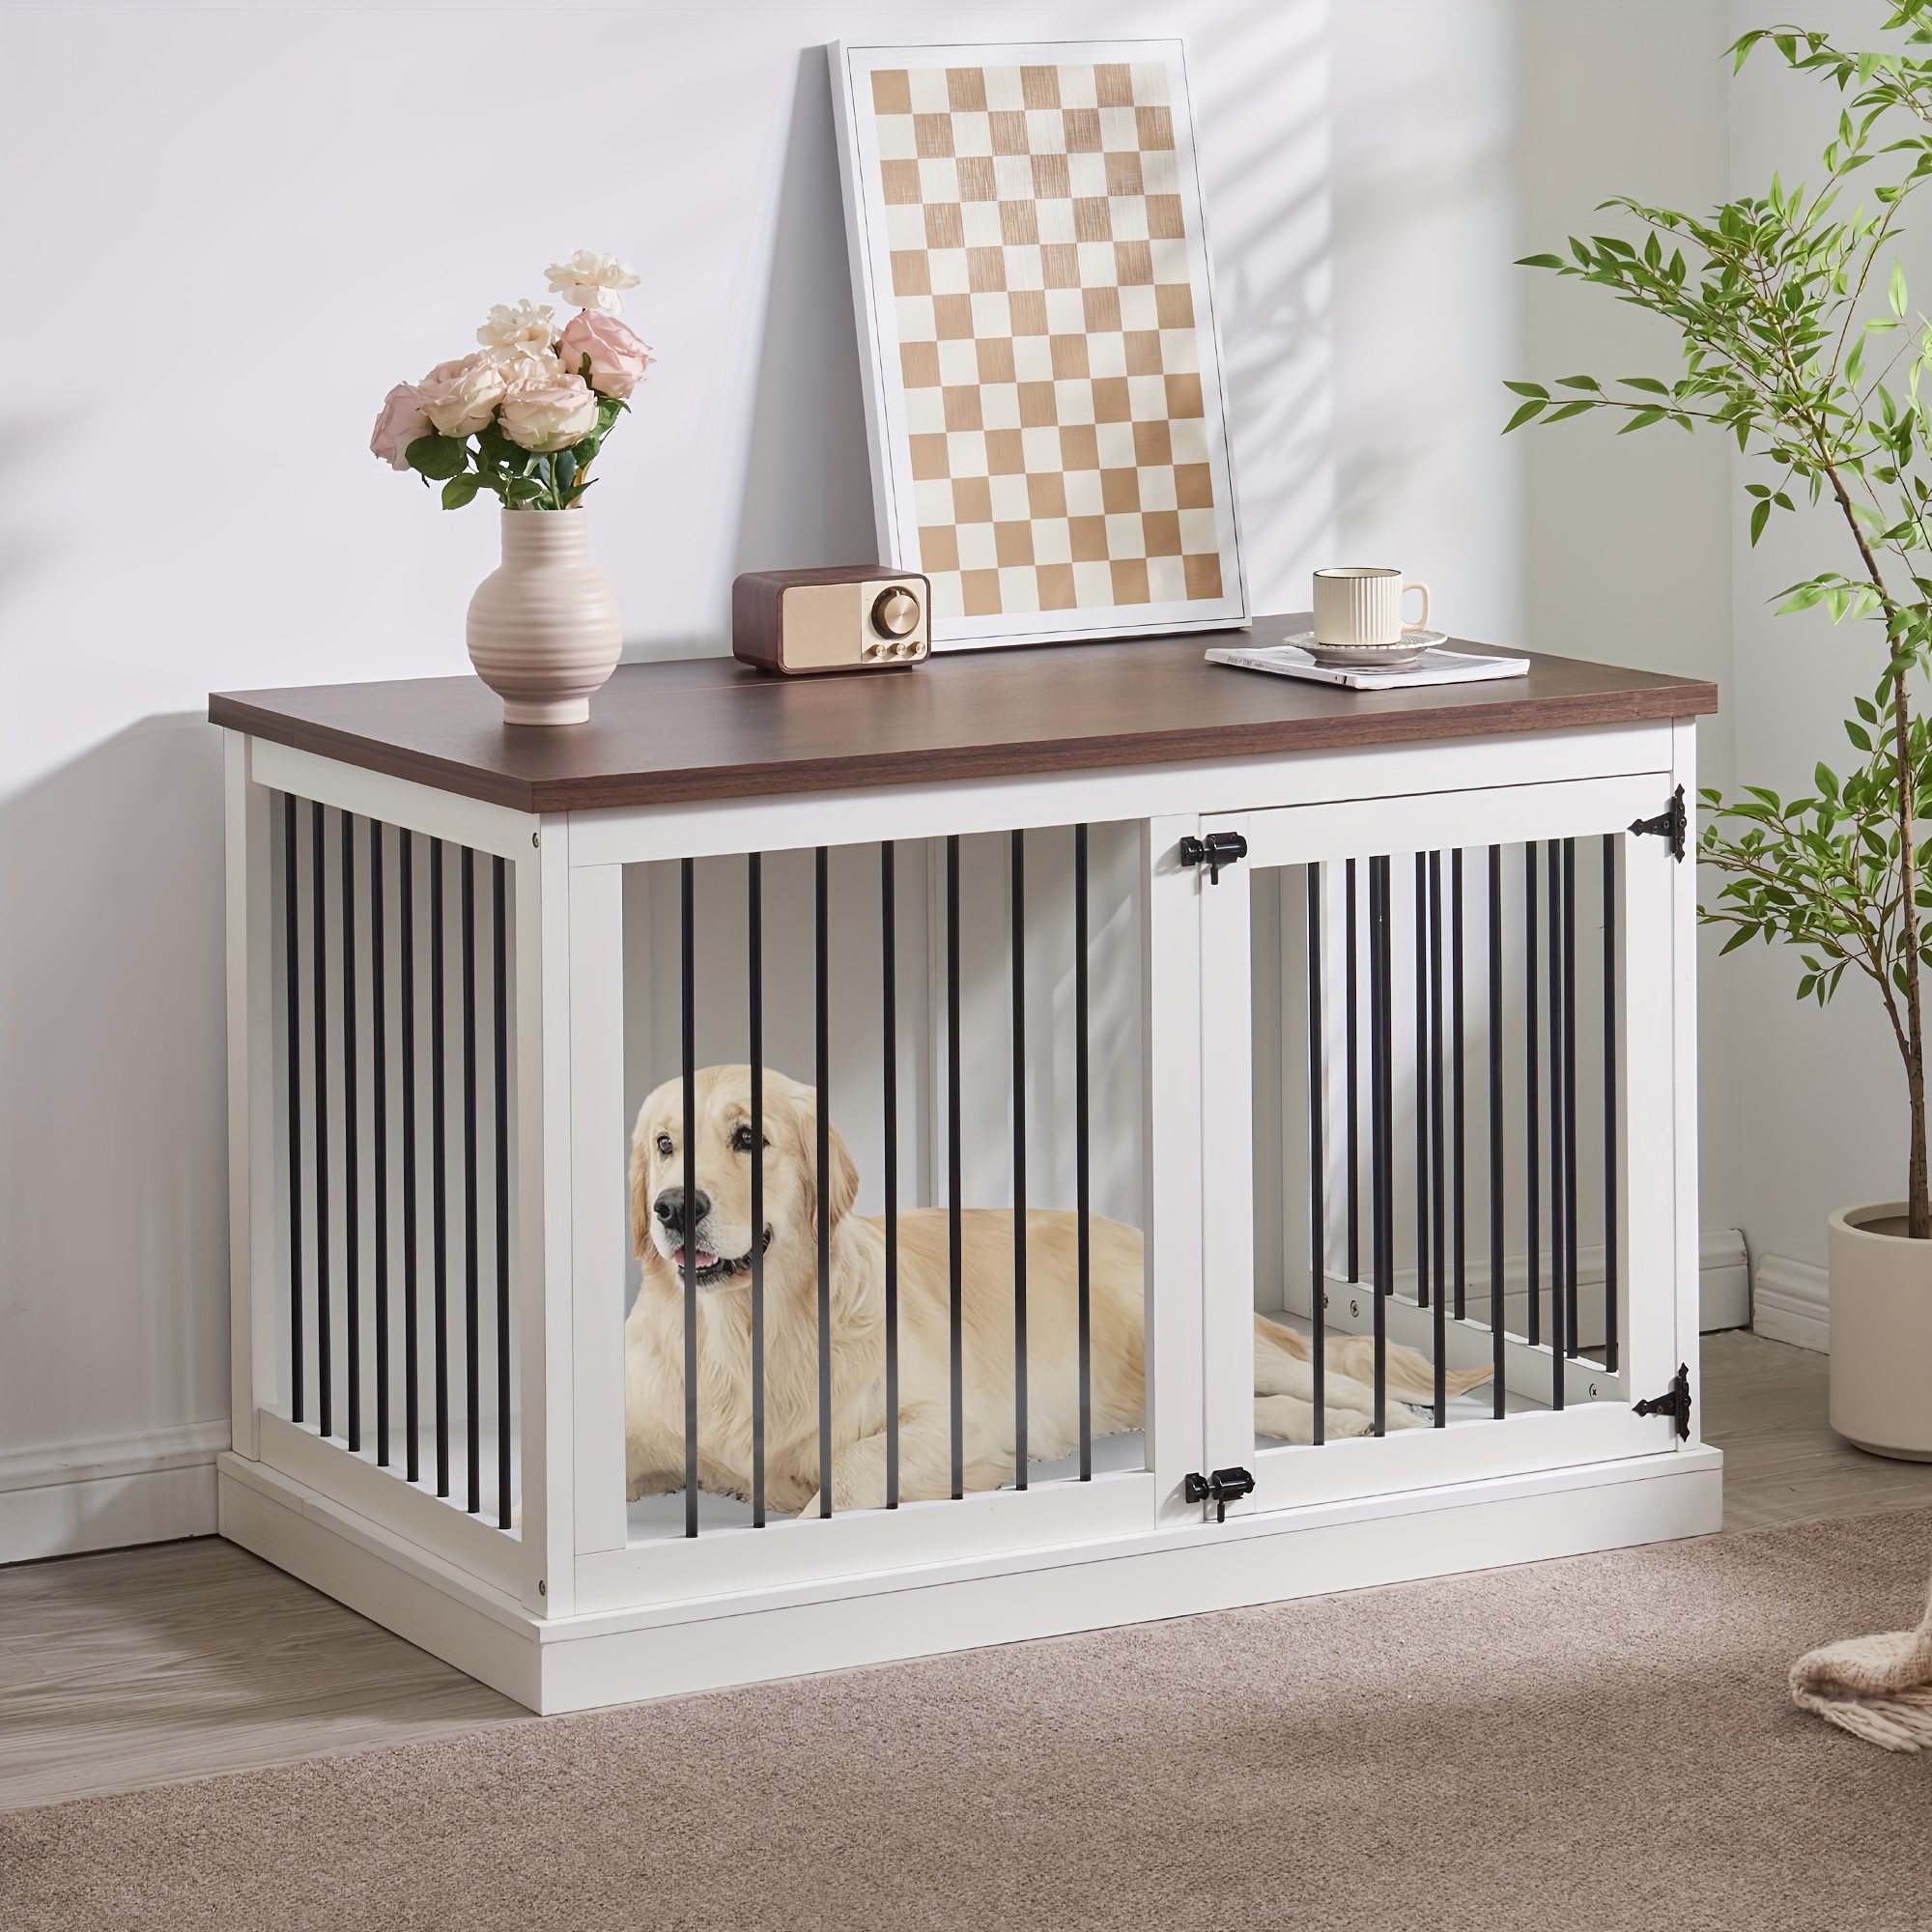 

Large Dog Crate Furniture, 47.2" Indoor Dog Kennel Furniture , Wooden Decorative Pet House End Side Table, White